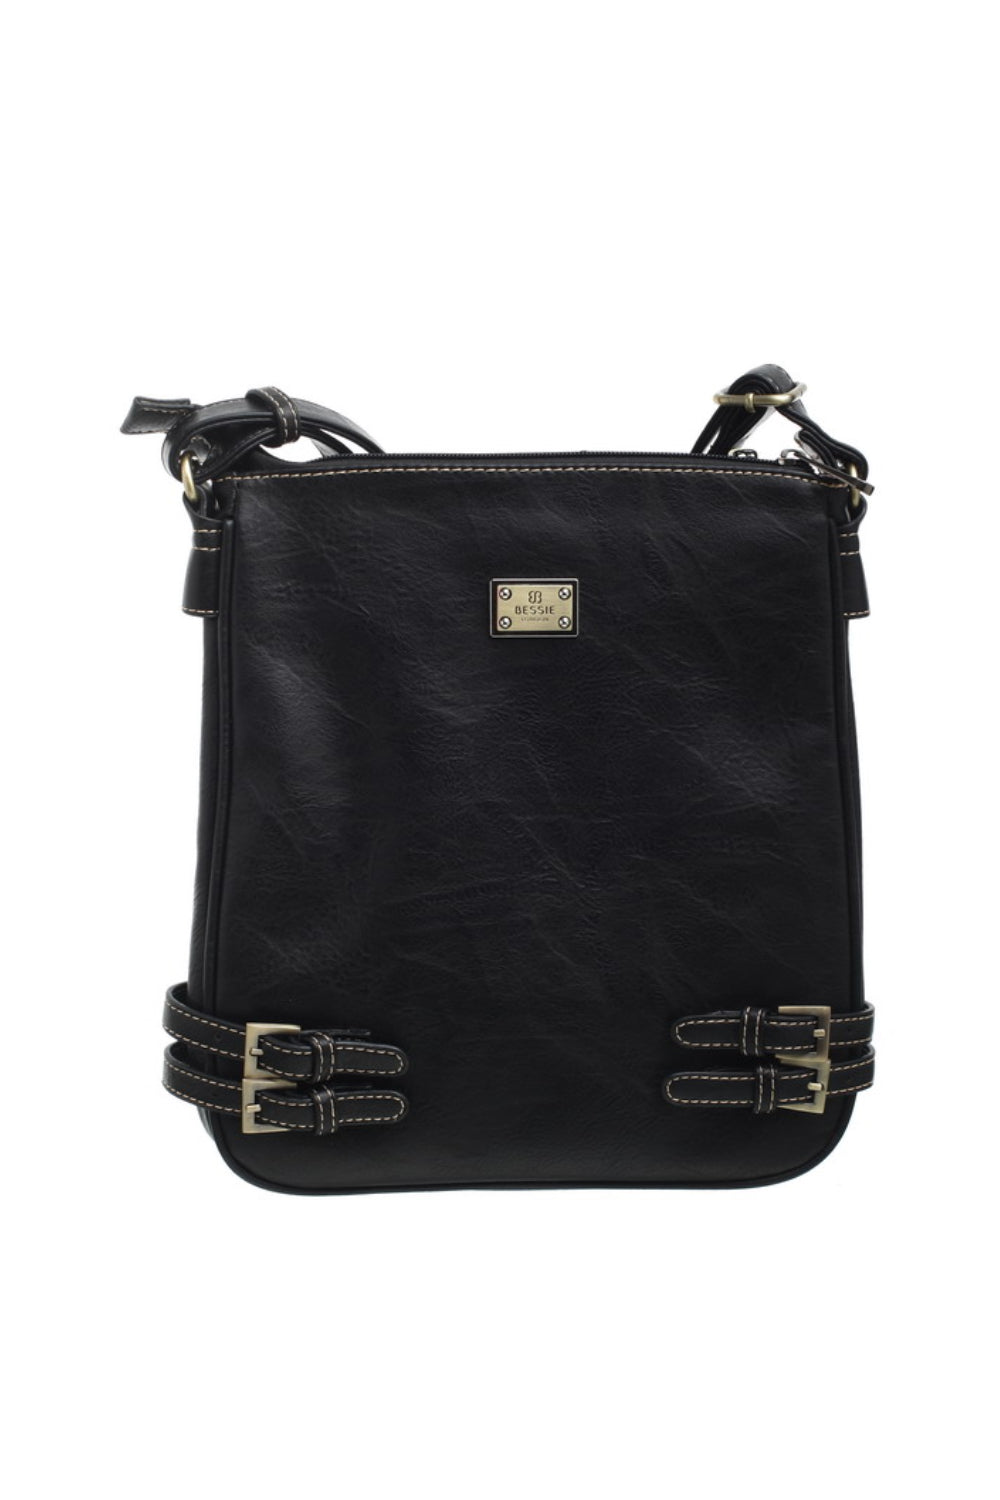 Bessie-Handbags-Double-Pocket-Crossbody-Bag-Black-djv-boutique-ipswich-1